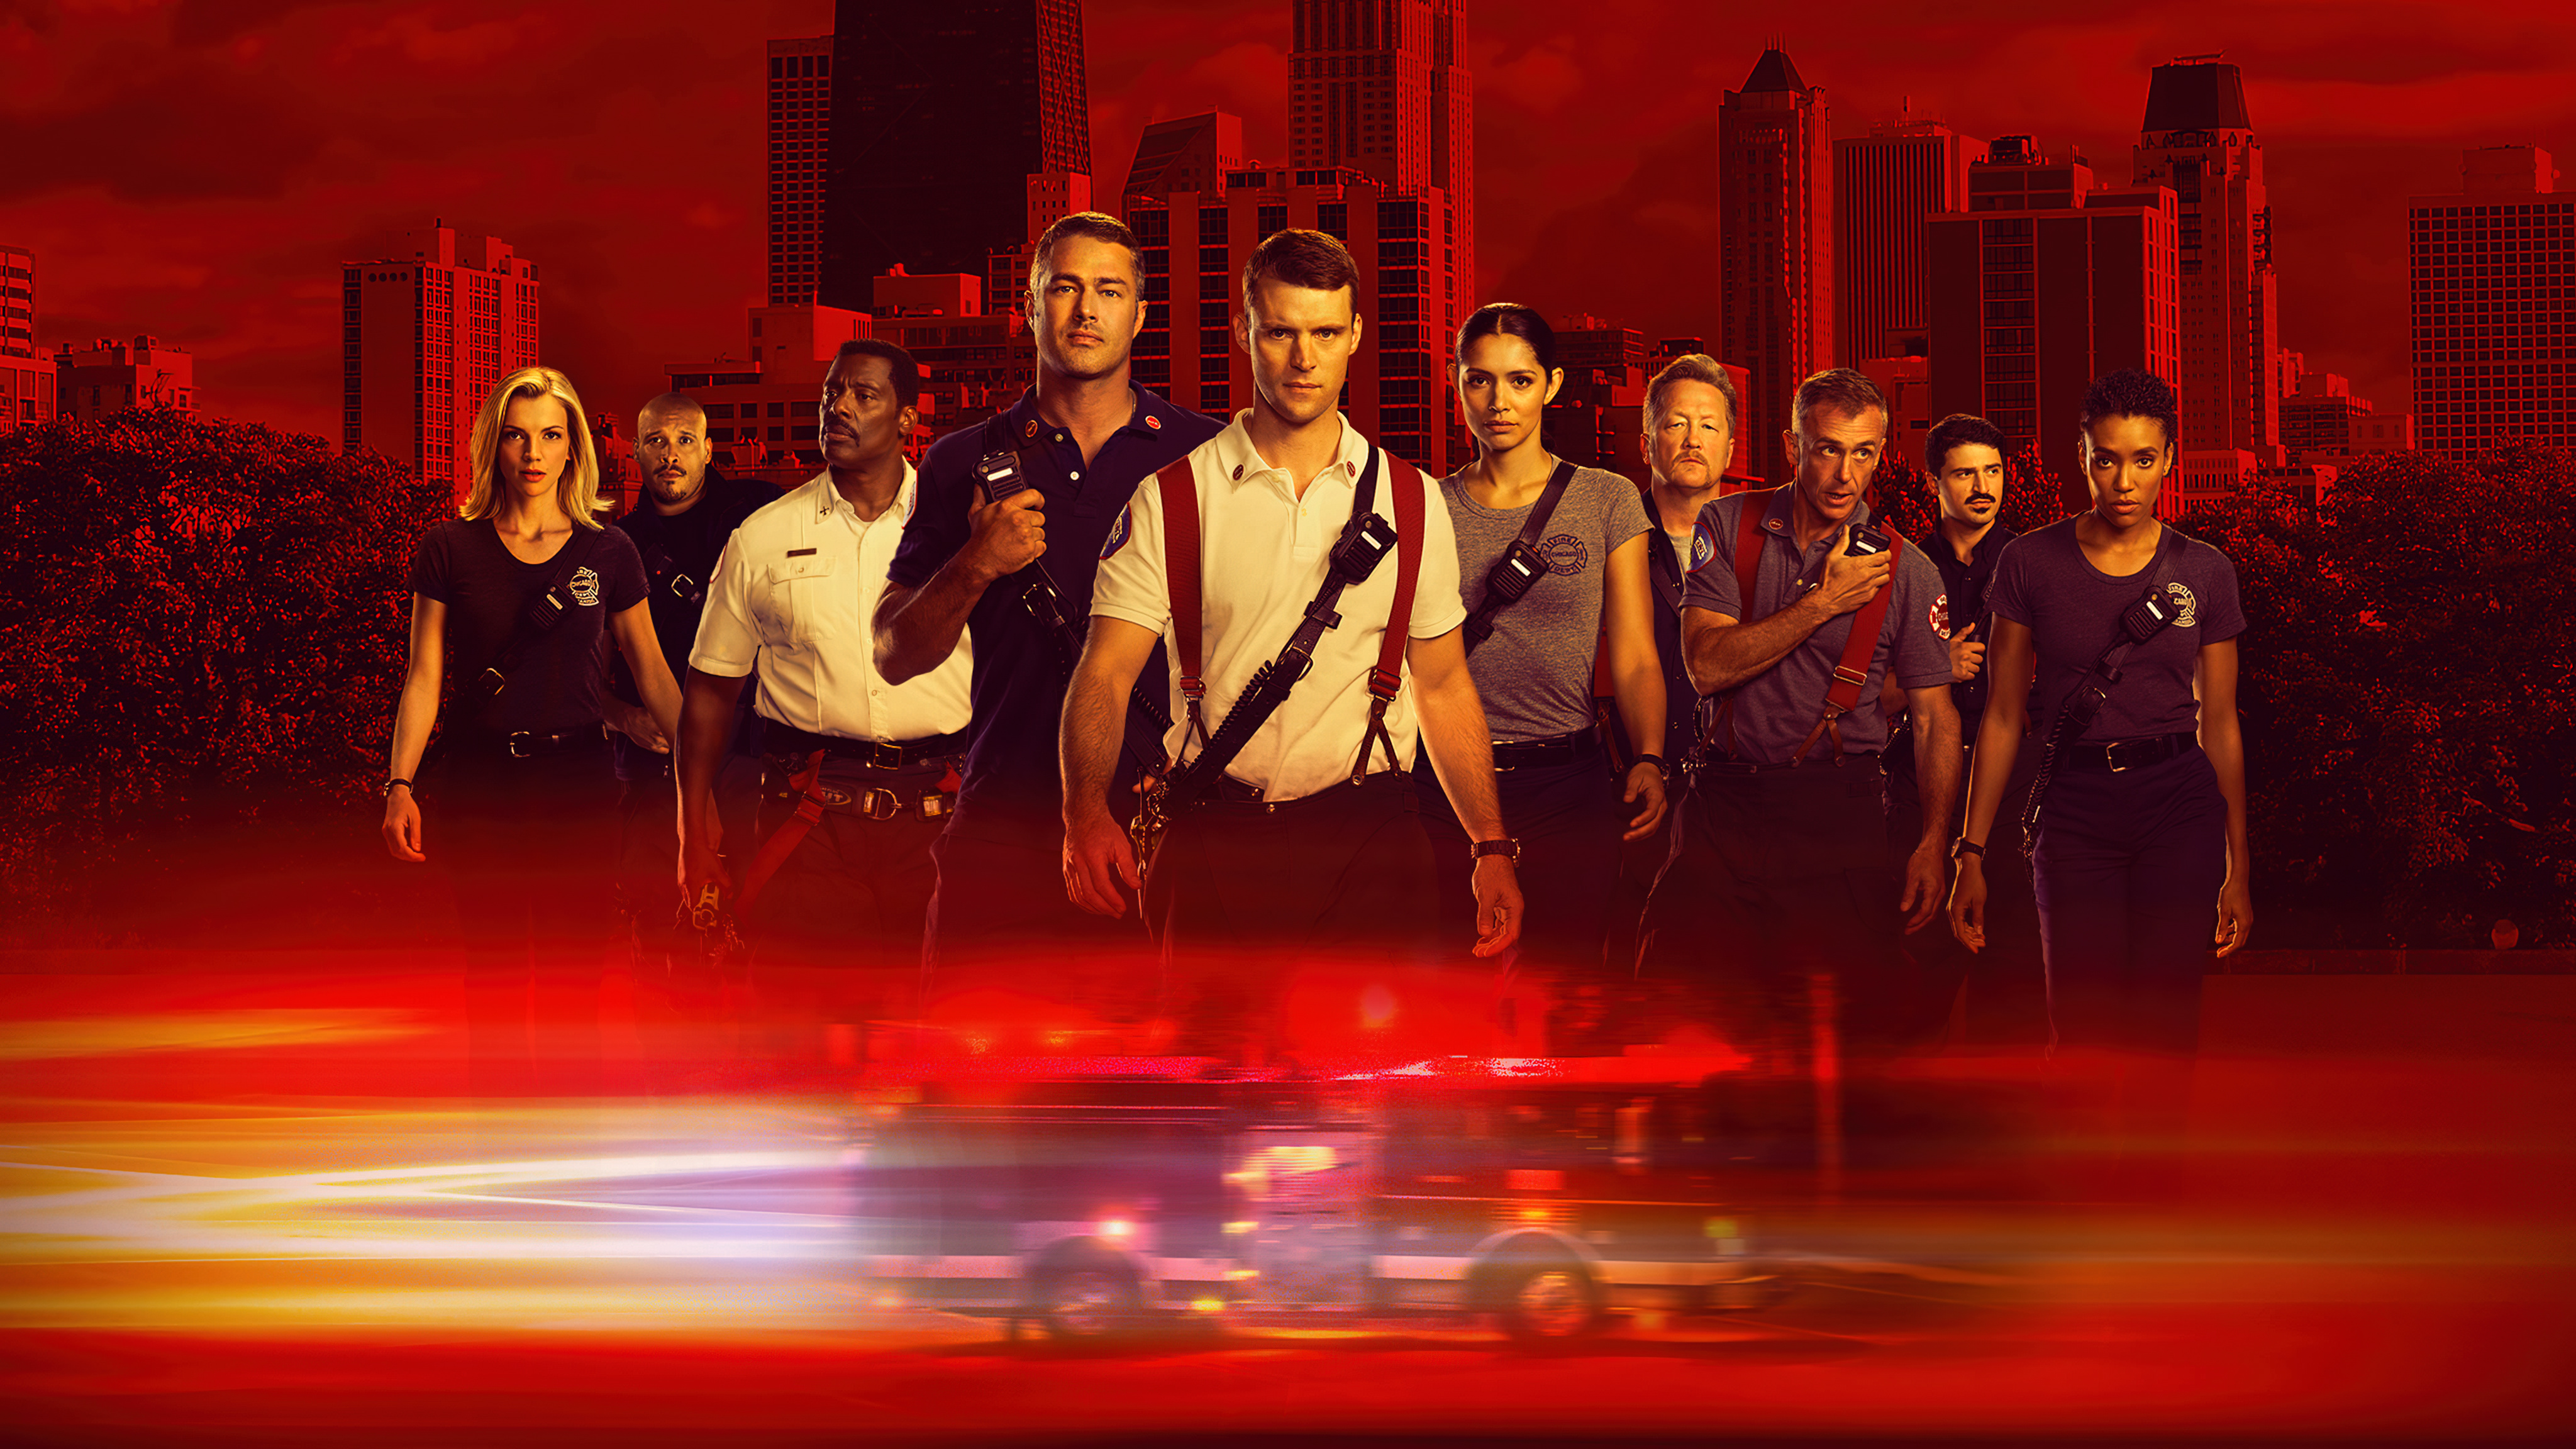 Chicago Fire Season 1 (2012) ทีมผจญไฟ หัวใจเพชร 